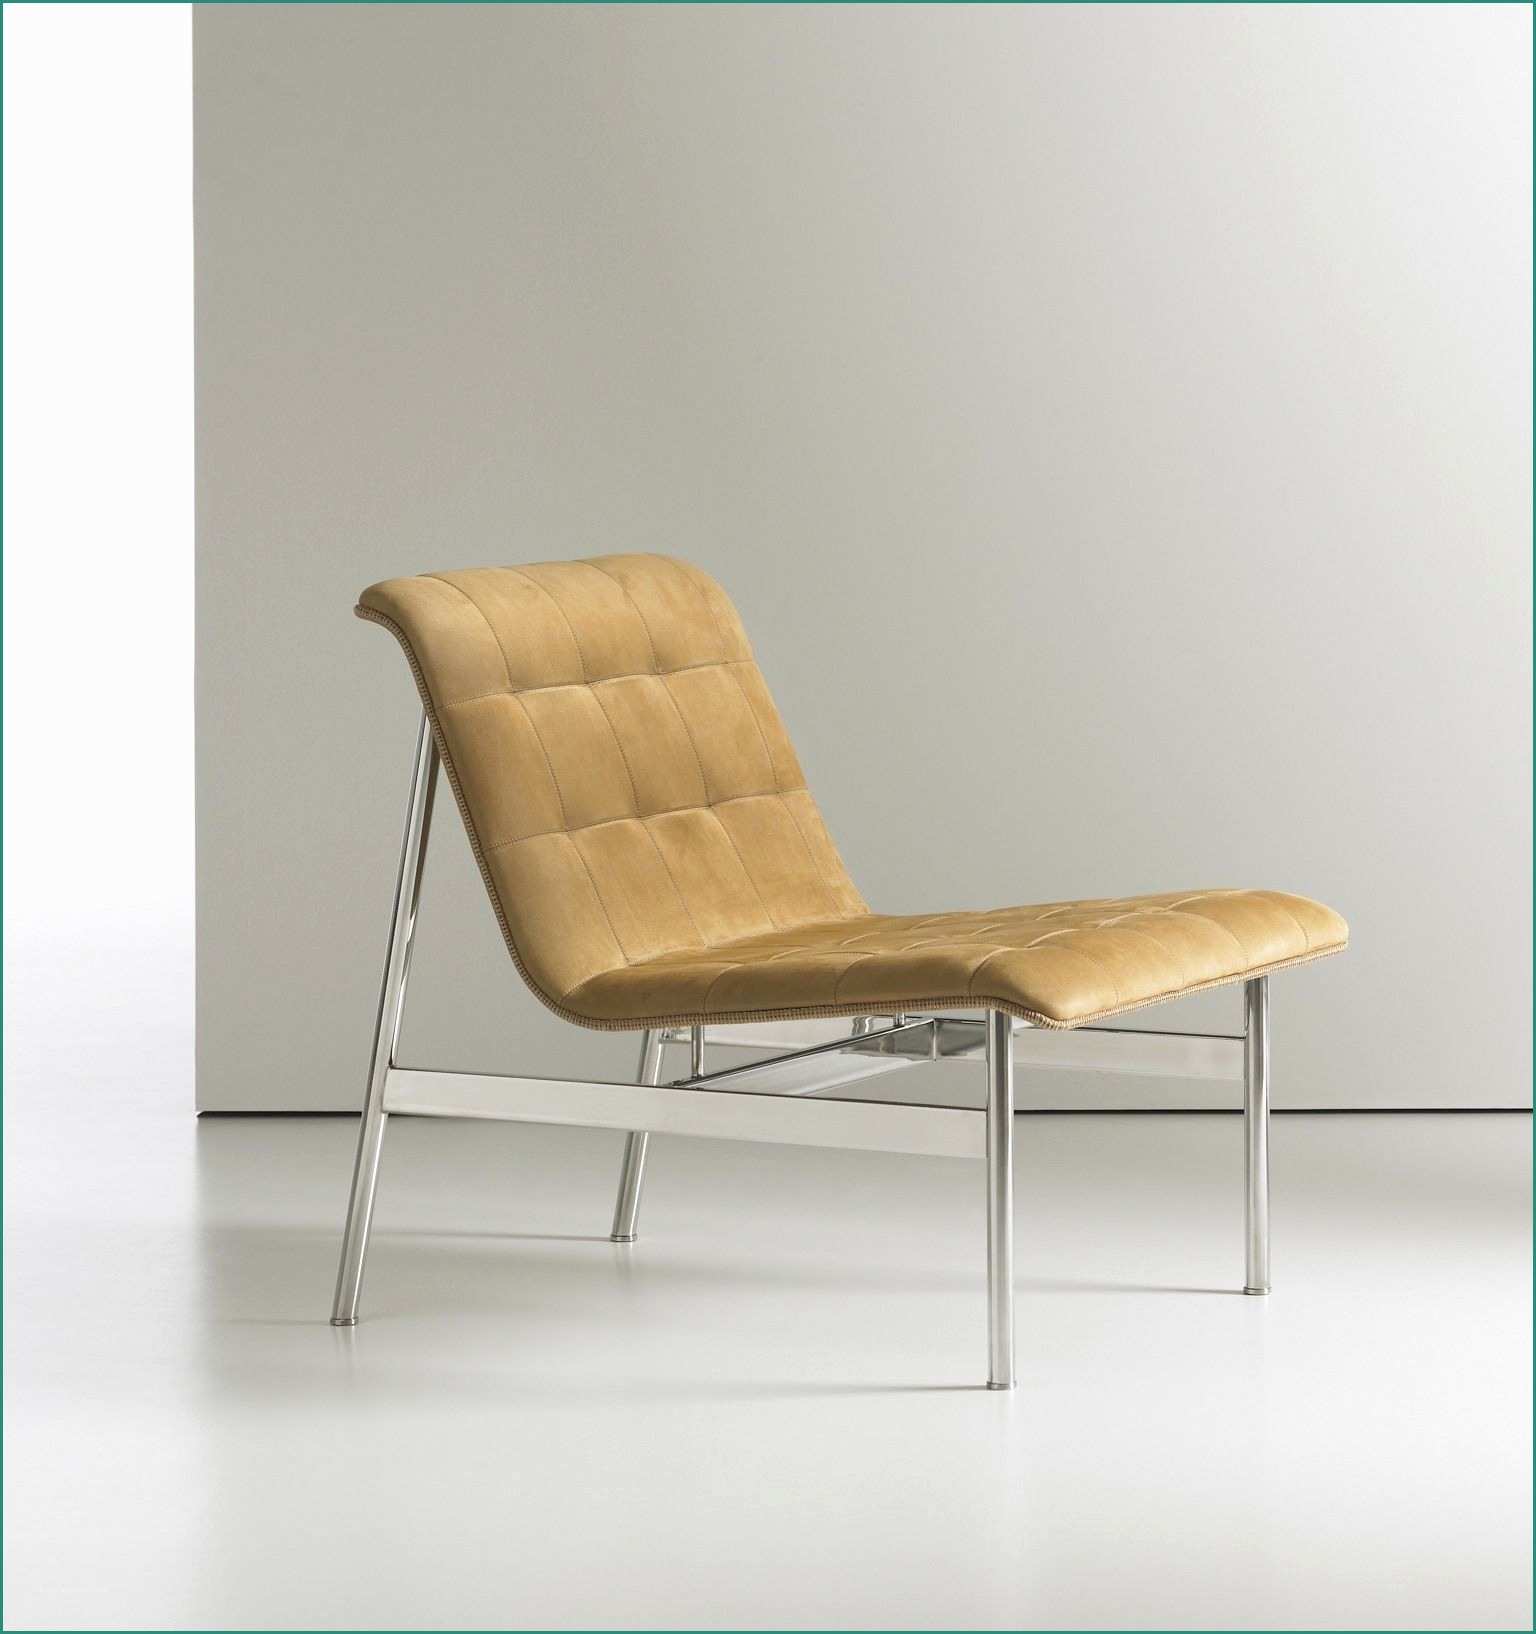 Alvar Aalto Sedie E Cp 1 Chair Charles Pollock for Bernhardt Design